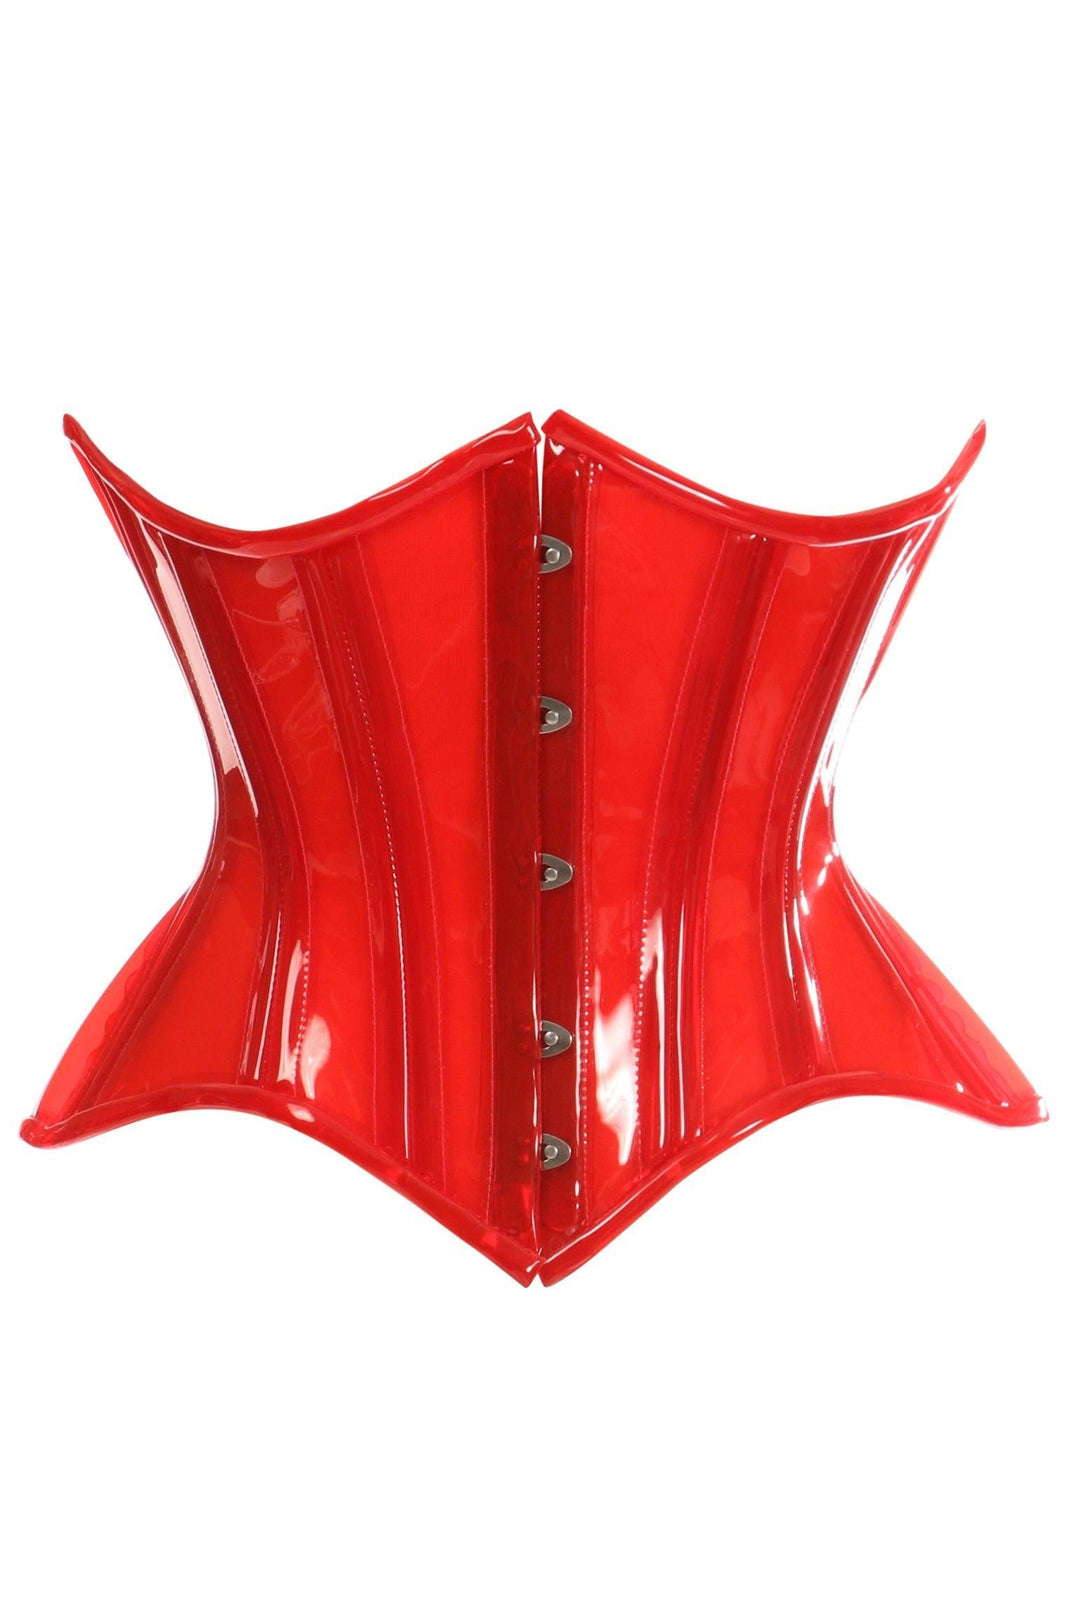 Lavish Red Clear Curvy Underbust Waist Cincher Corset-Waist Cincher-Daisy Corsets-Red-2X-SEXYSHOES.COM